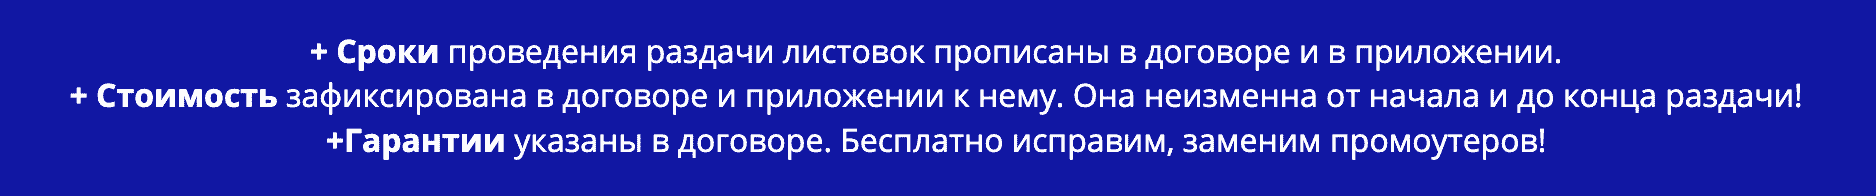 Условия договора раздачи листовок у метро Аникеевка